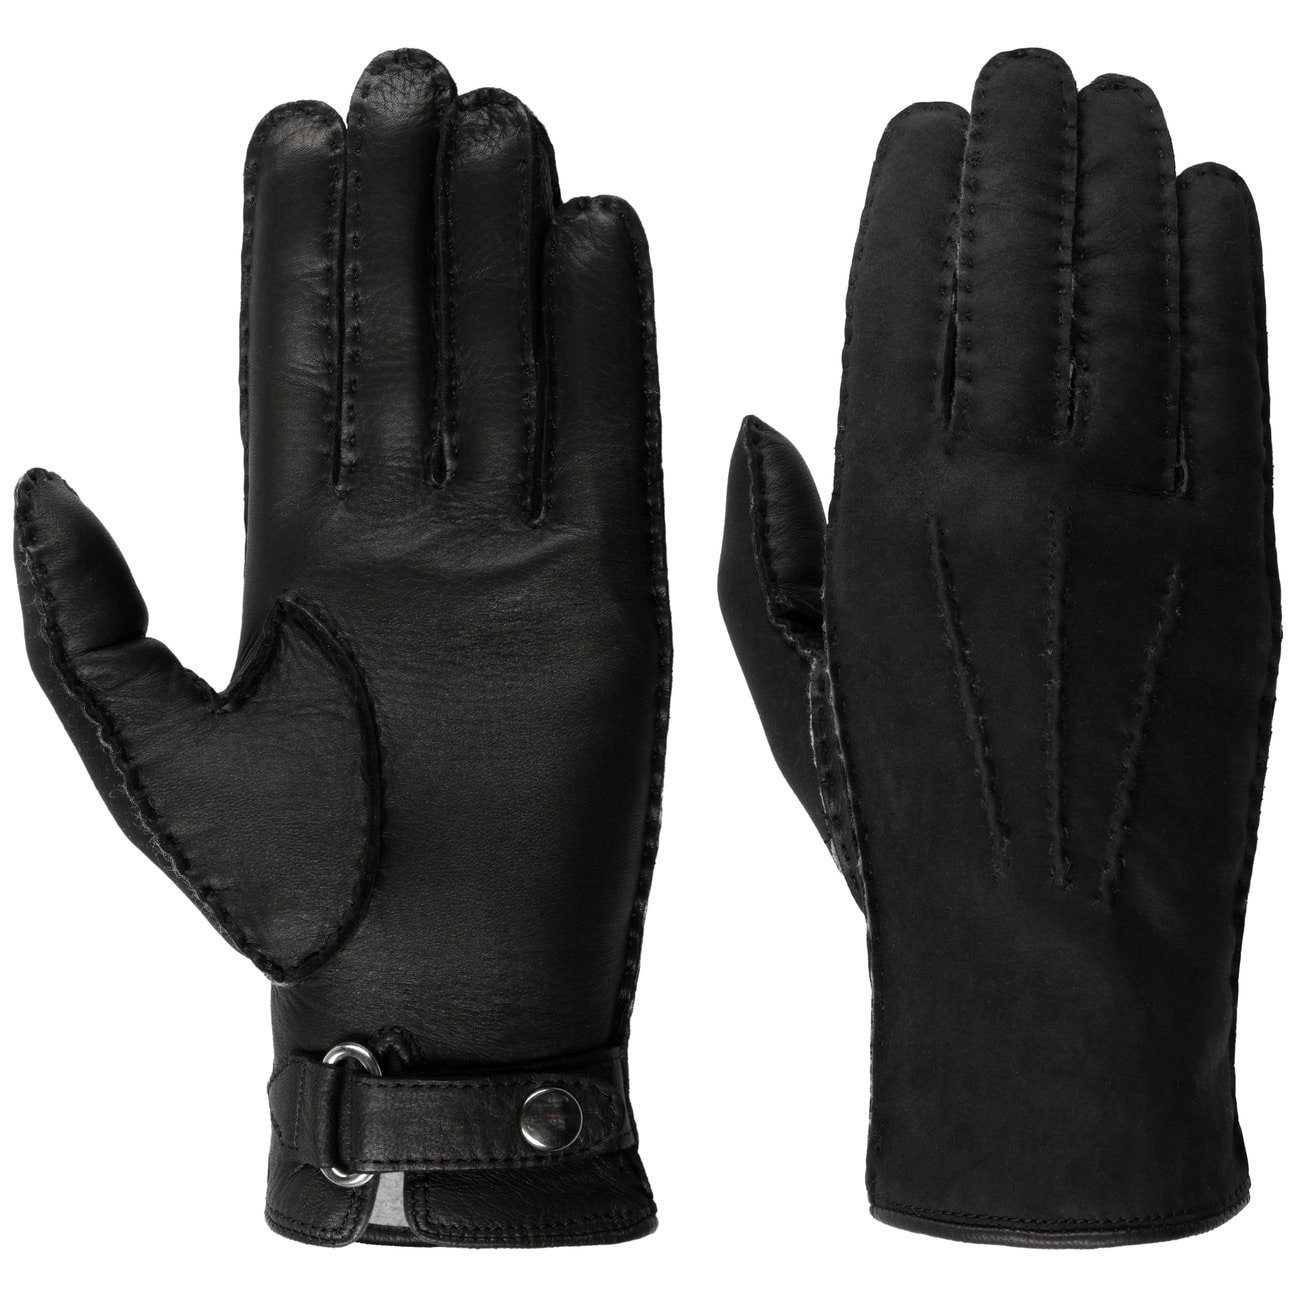 Caridei Lederhandschuhe Handschuhe mit Futter, Made in Italy schwarz